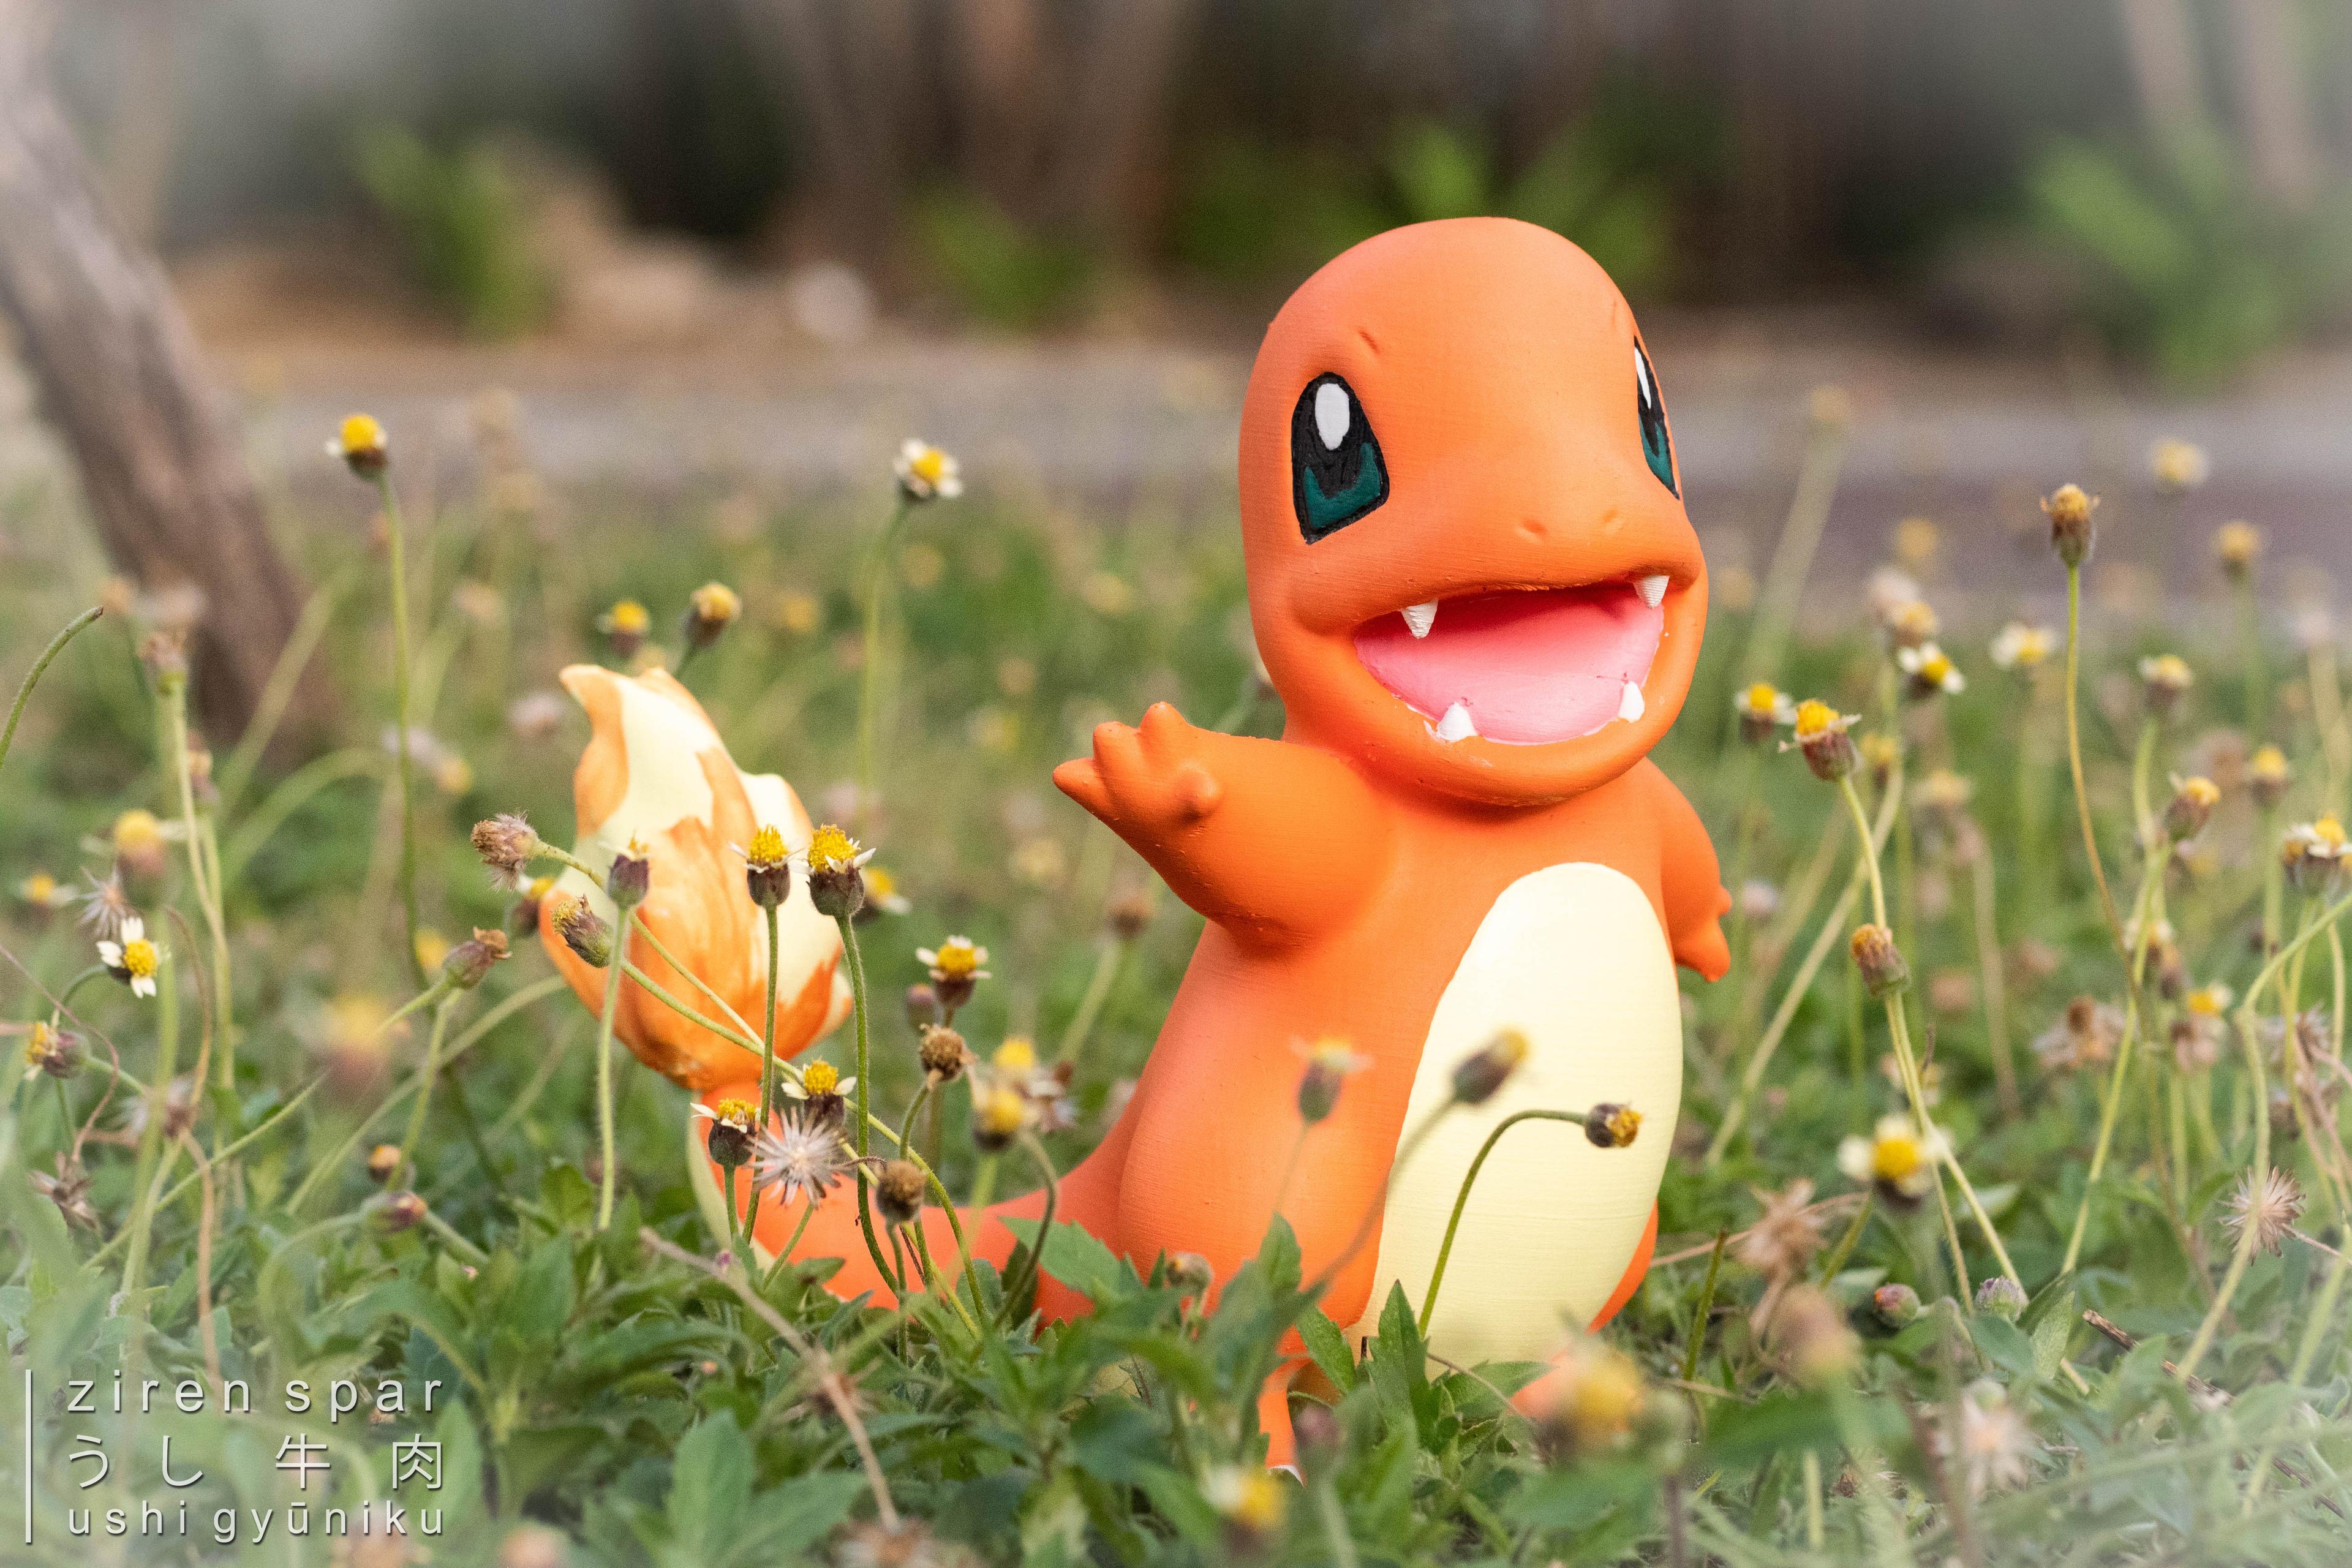 Charmander(Pokémon) - happy #pokémonDay!
kanto starters will always be special💝💝💝
🧵 polymaker 🤍💙💚💙
🖨️ creality ender 3 pro w/ capricorn tube
📸 gears: niichan 
🧩 assist: touchan & kāchan
🐮 painting & photos by yours truly
#FilamentFebruary - 3d model